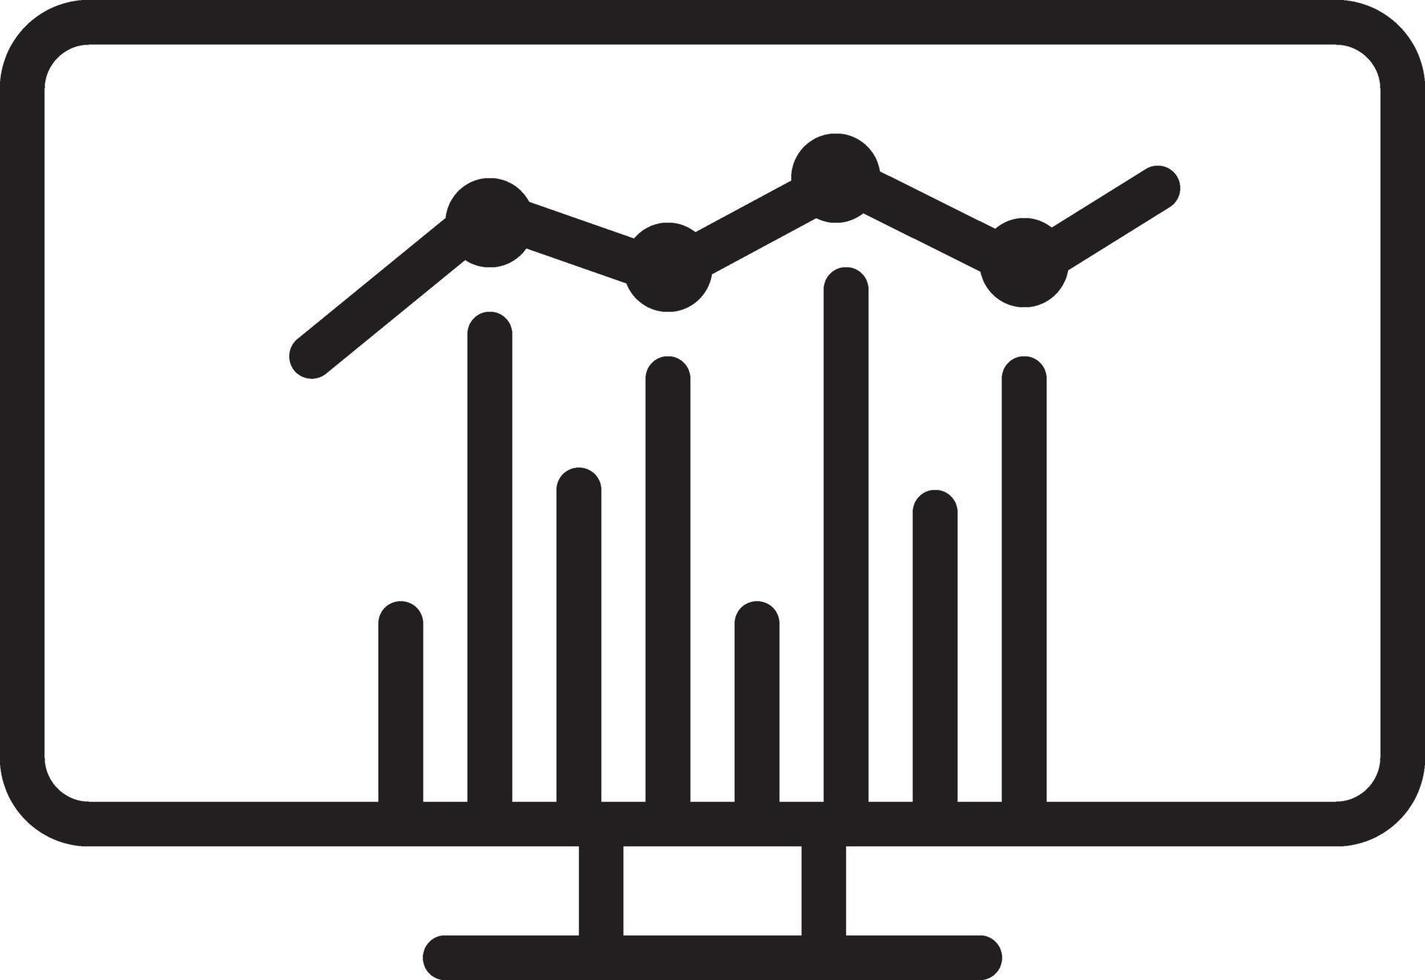 Line icon for statistics vector